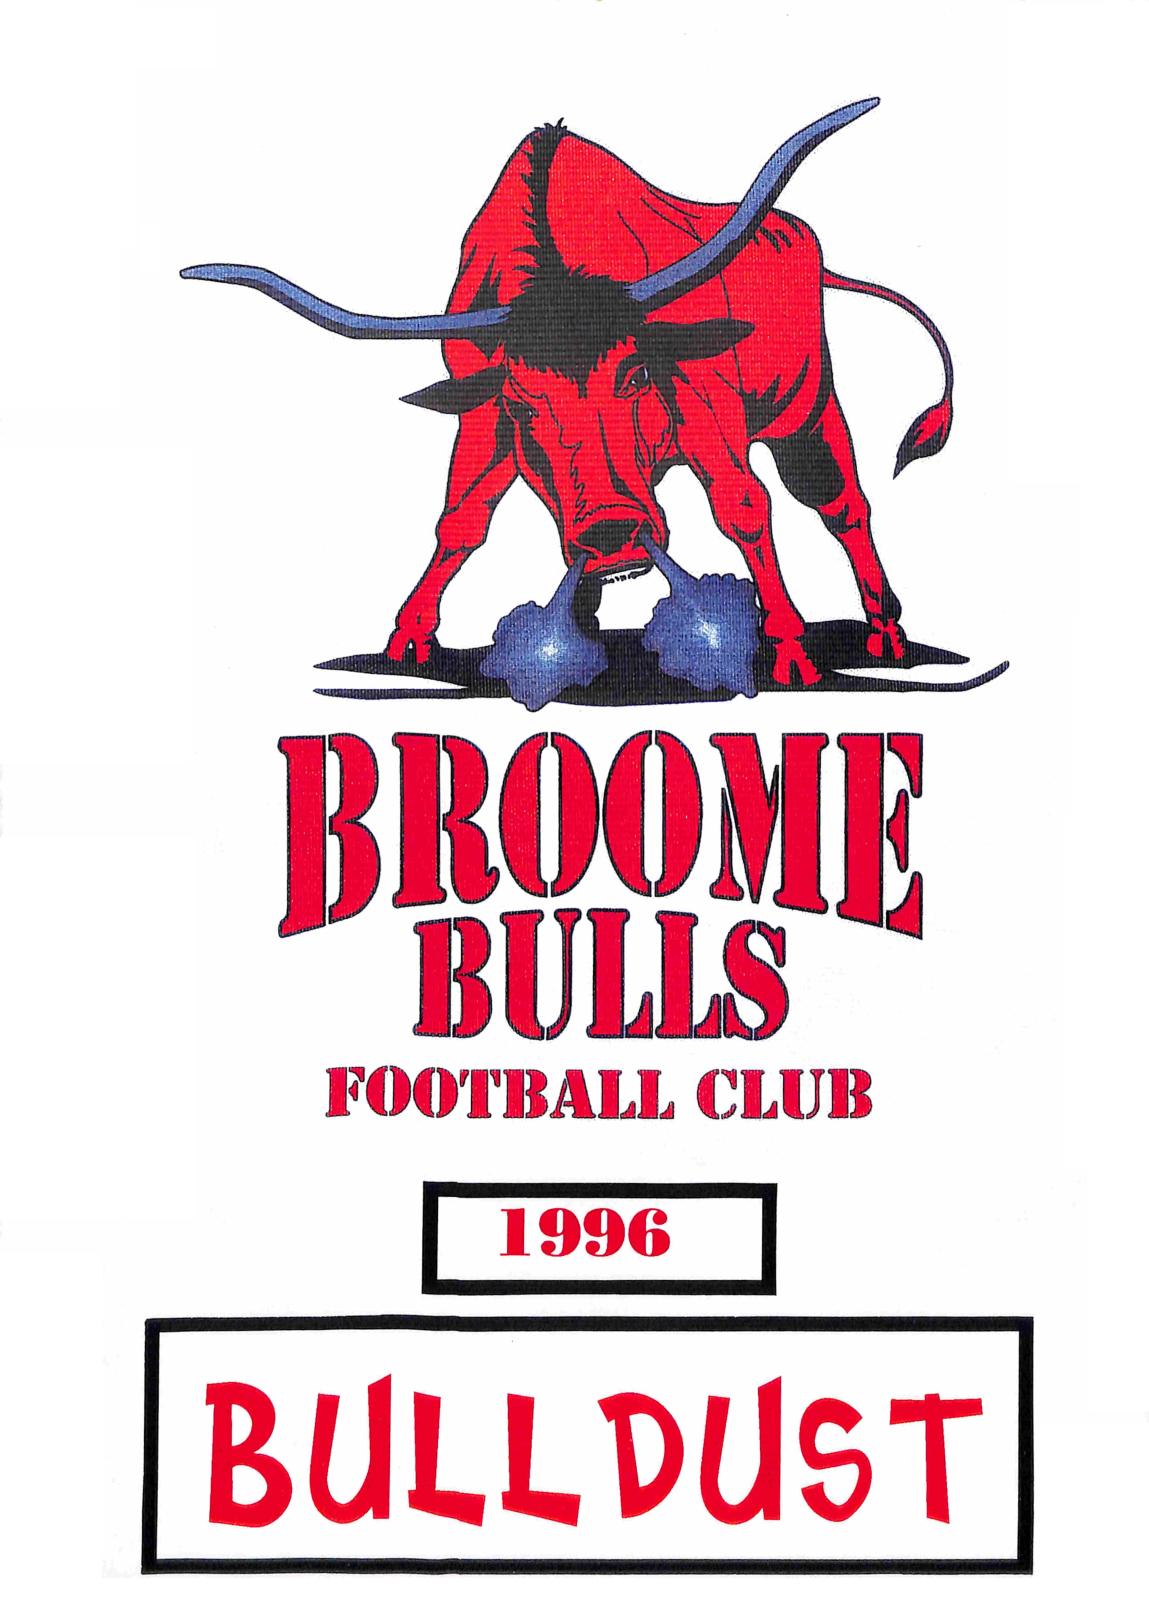 Broome Bulls Bull Dust magazine 1996